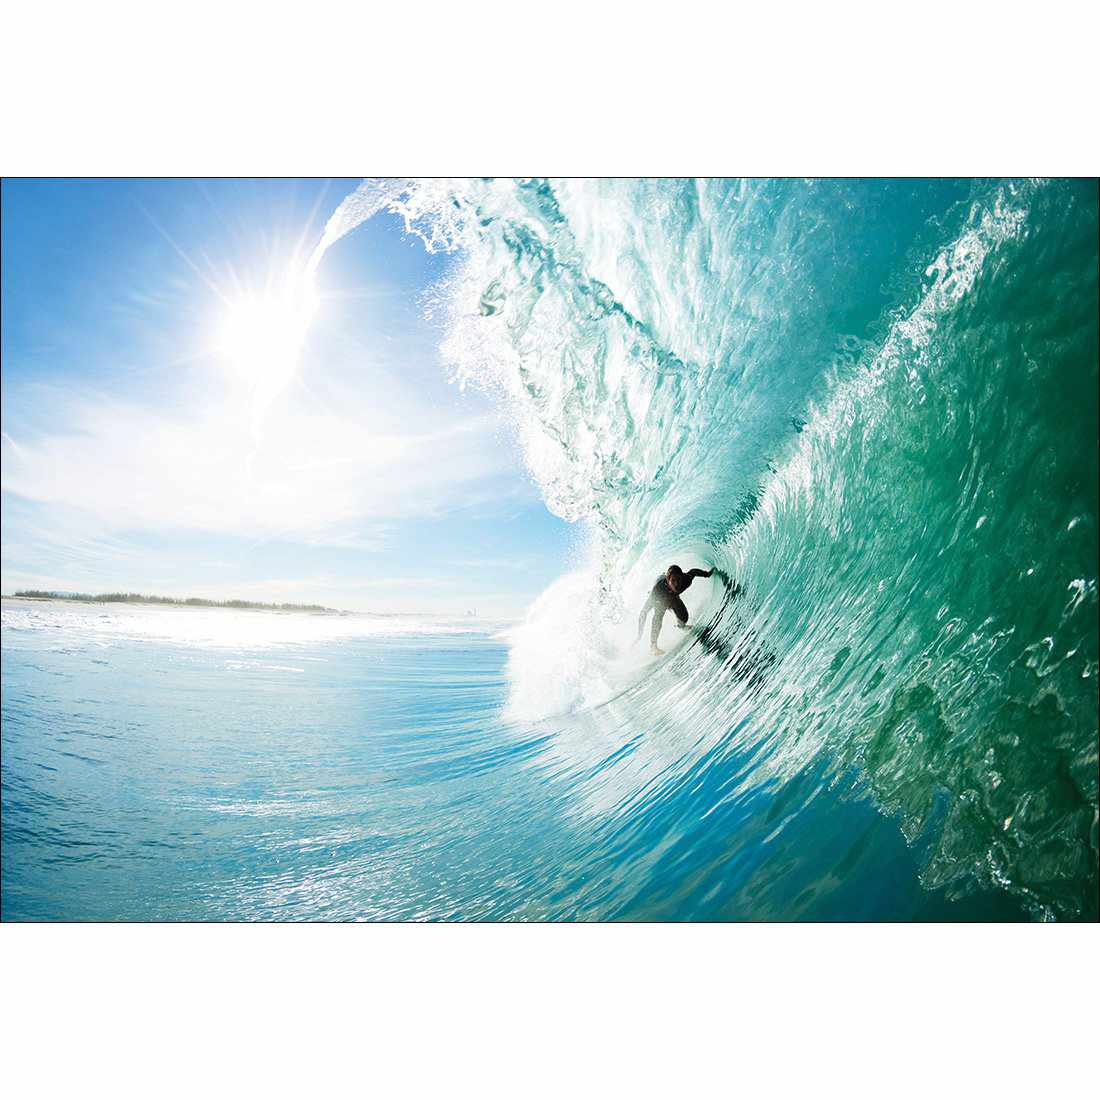 Surfer Under Wave Canvas Art-Canvas-Wall Art Designs-45x30cm-Canvas - No Frame-Wall Art Designs